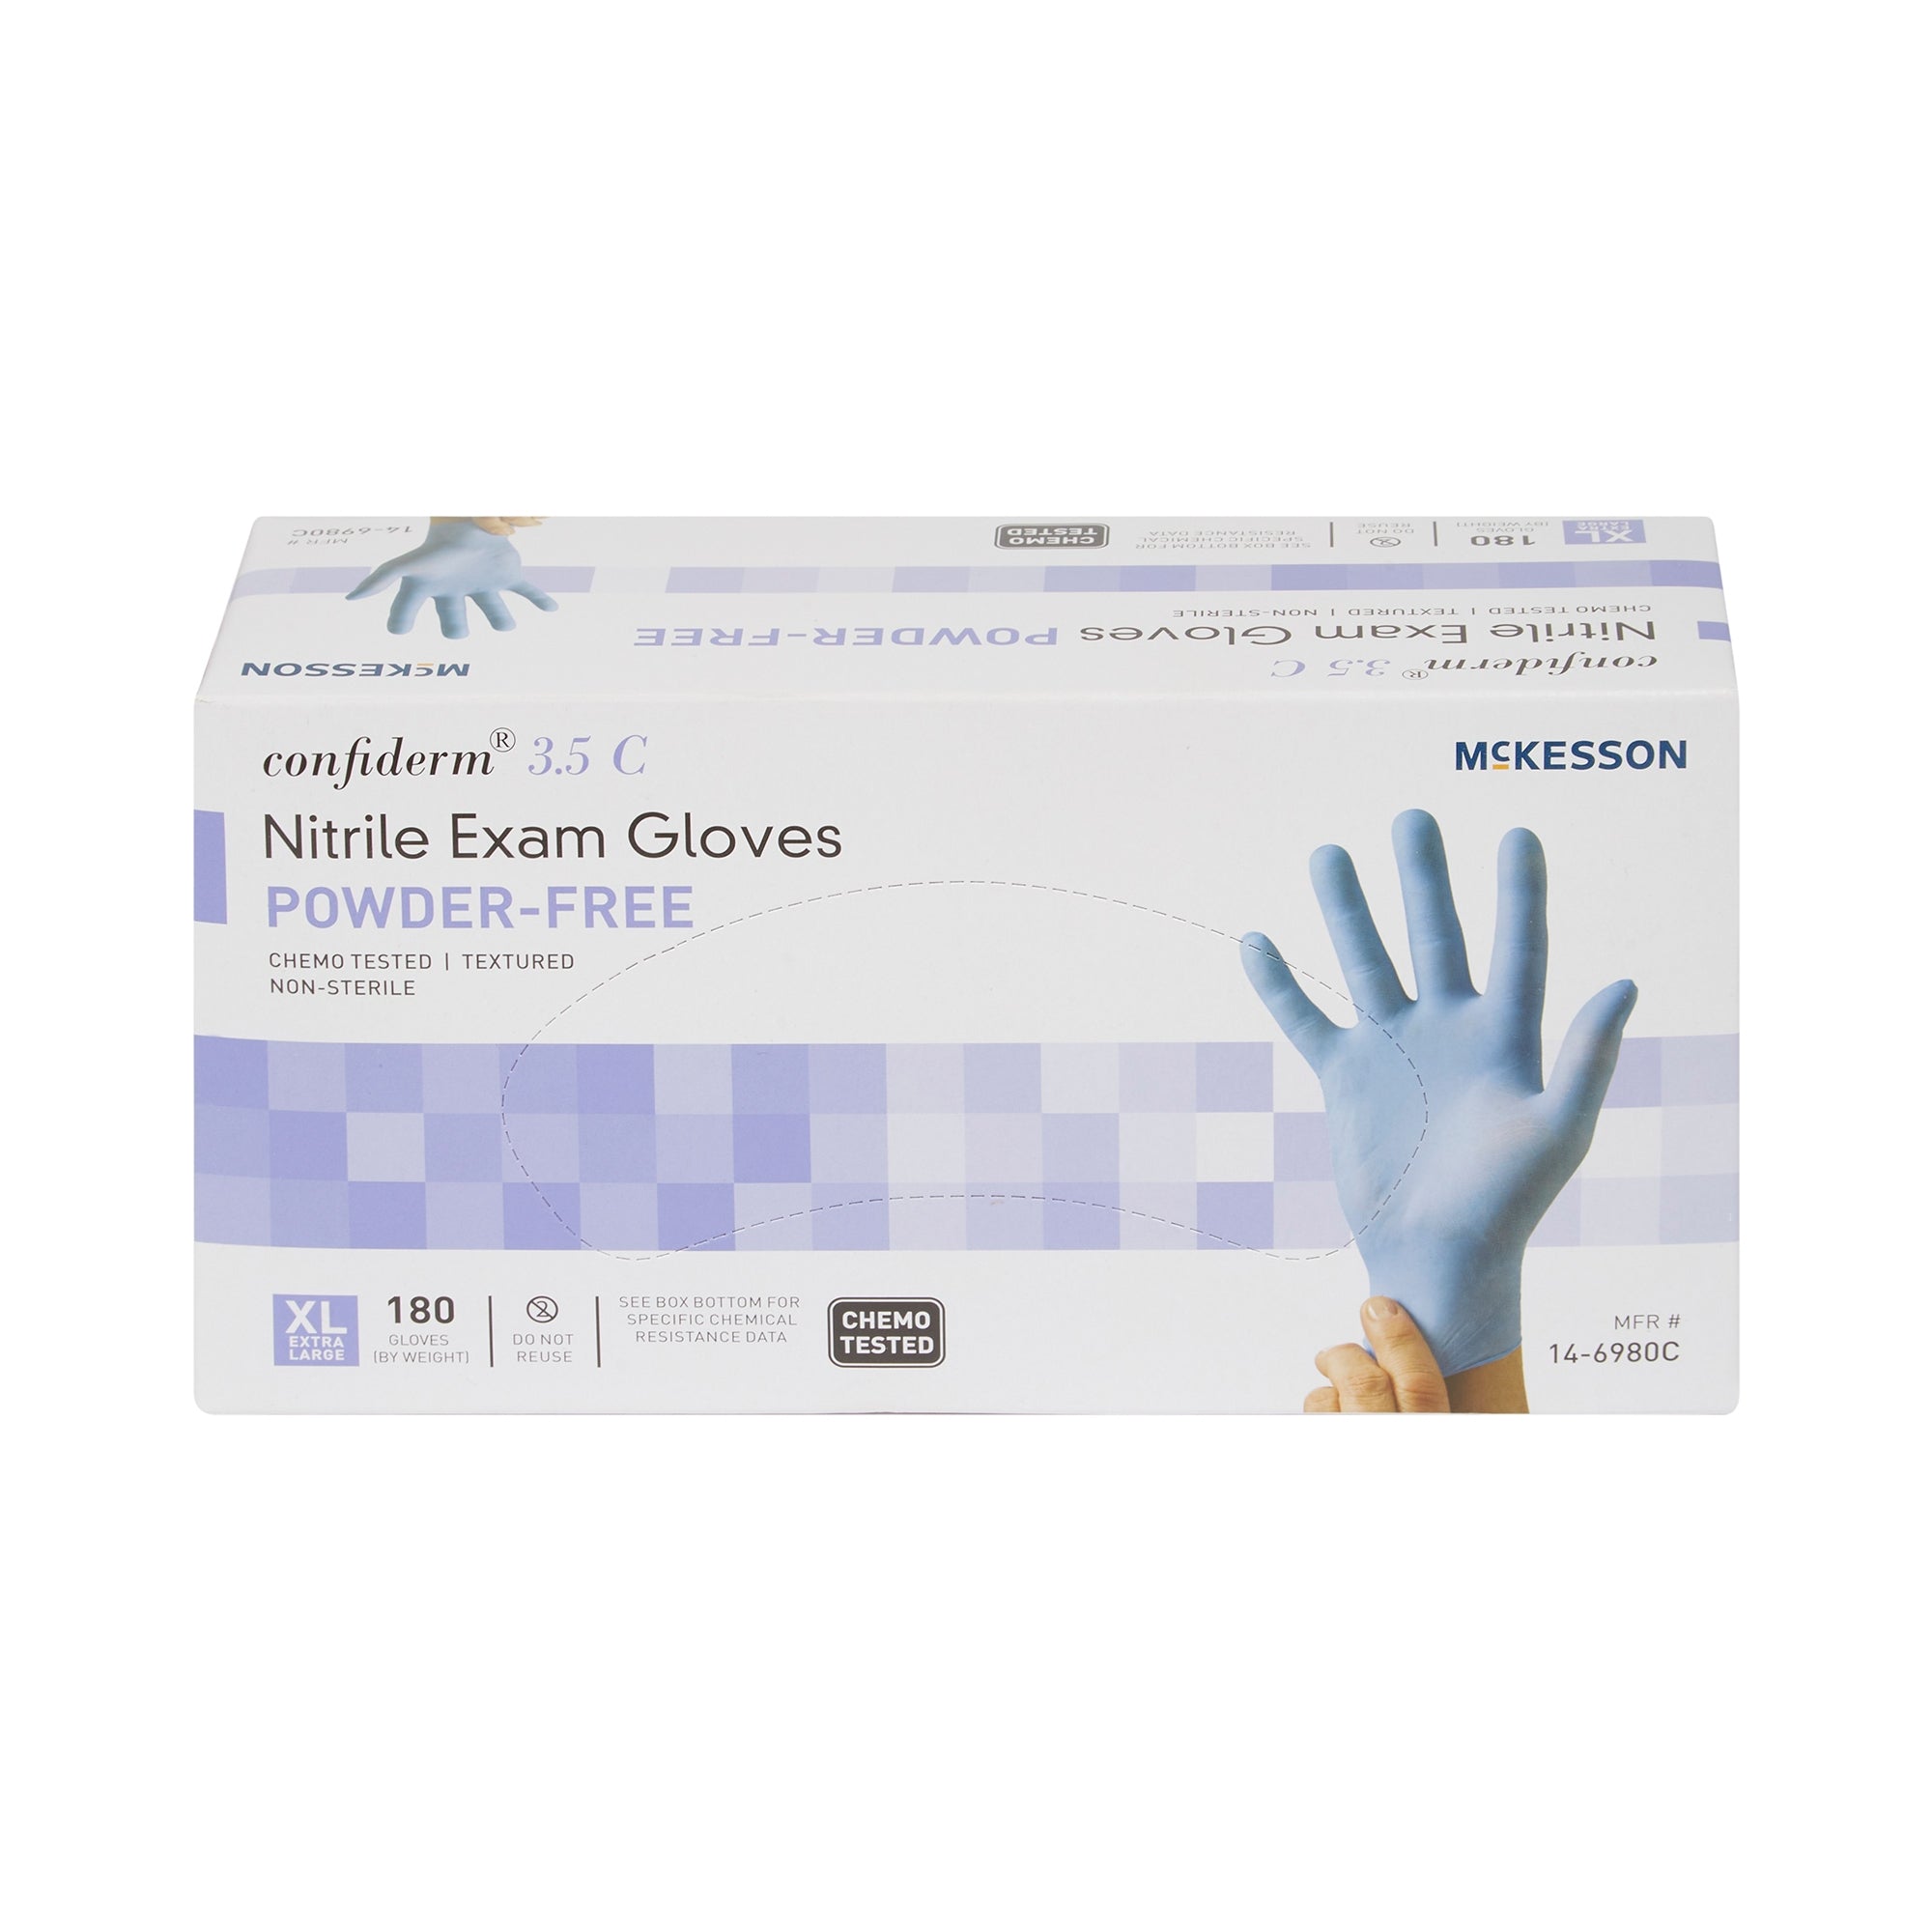 McKesson Confiderm 3.5C Nitrile Exam Gloves XL, Blue - Chemo Rated (180ct)